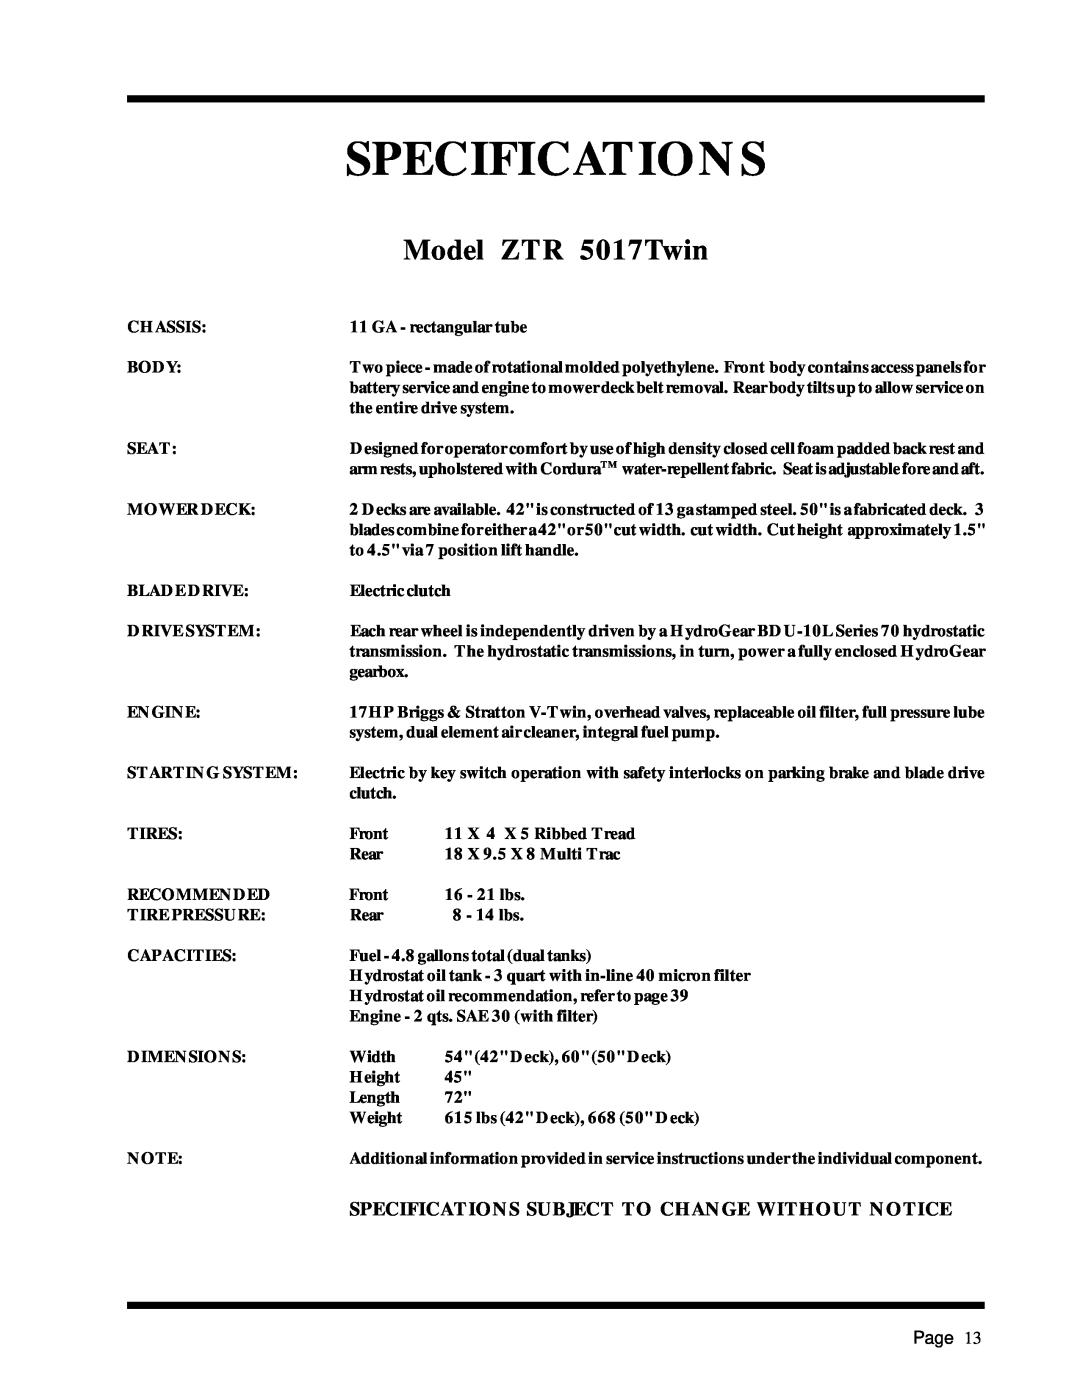 Dixon manual Model ZTR 5017Twin, Specifications 